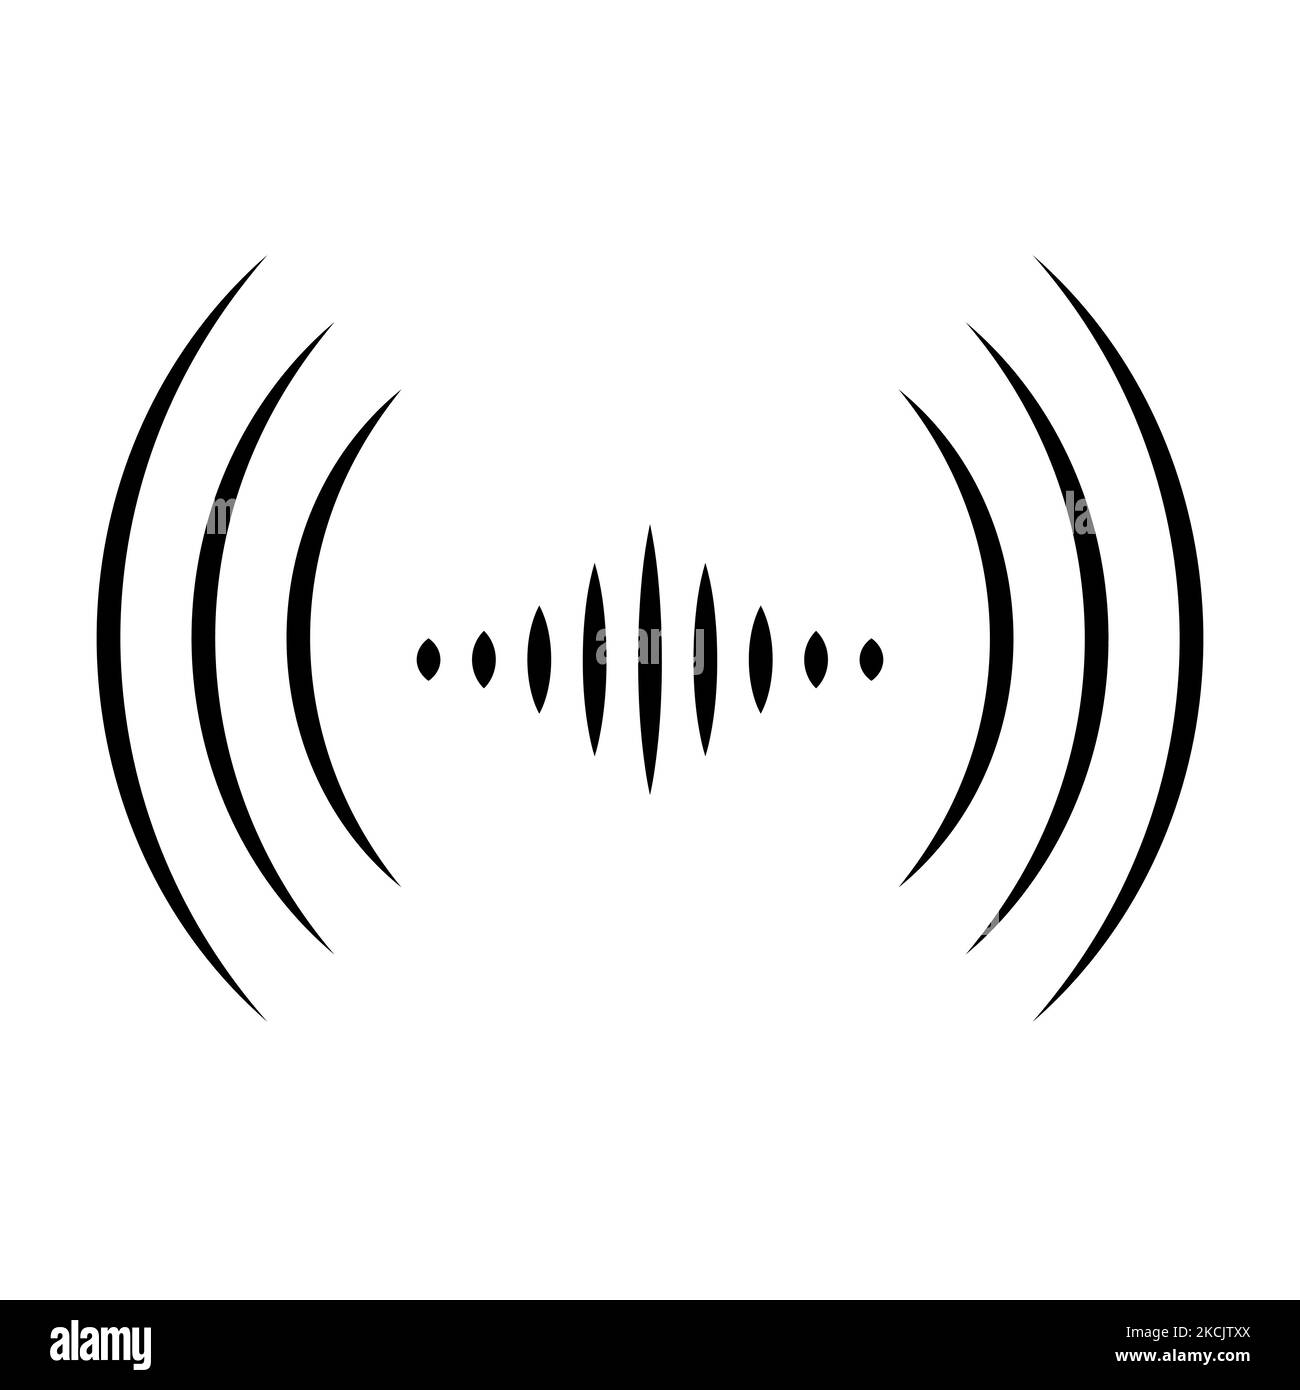 Art sound radio wave icon vector wifi sound signal connection for graphic design, logo, website, social media, mobile app, UI illustration& Illustrati Stock Vector